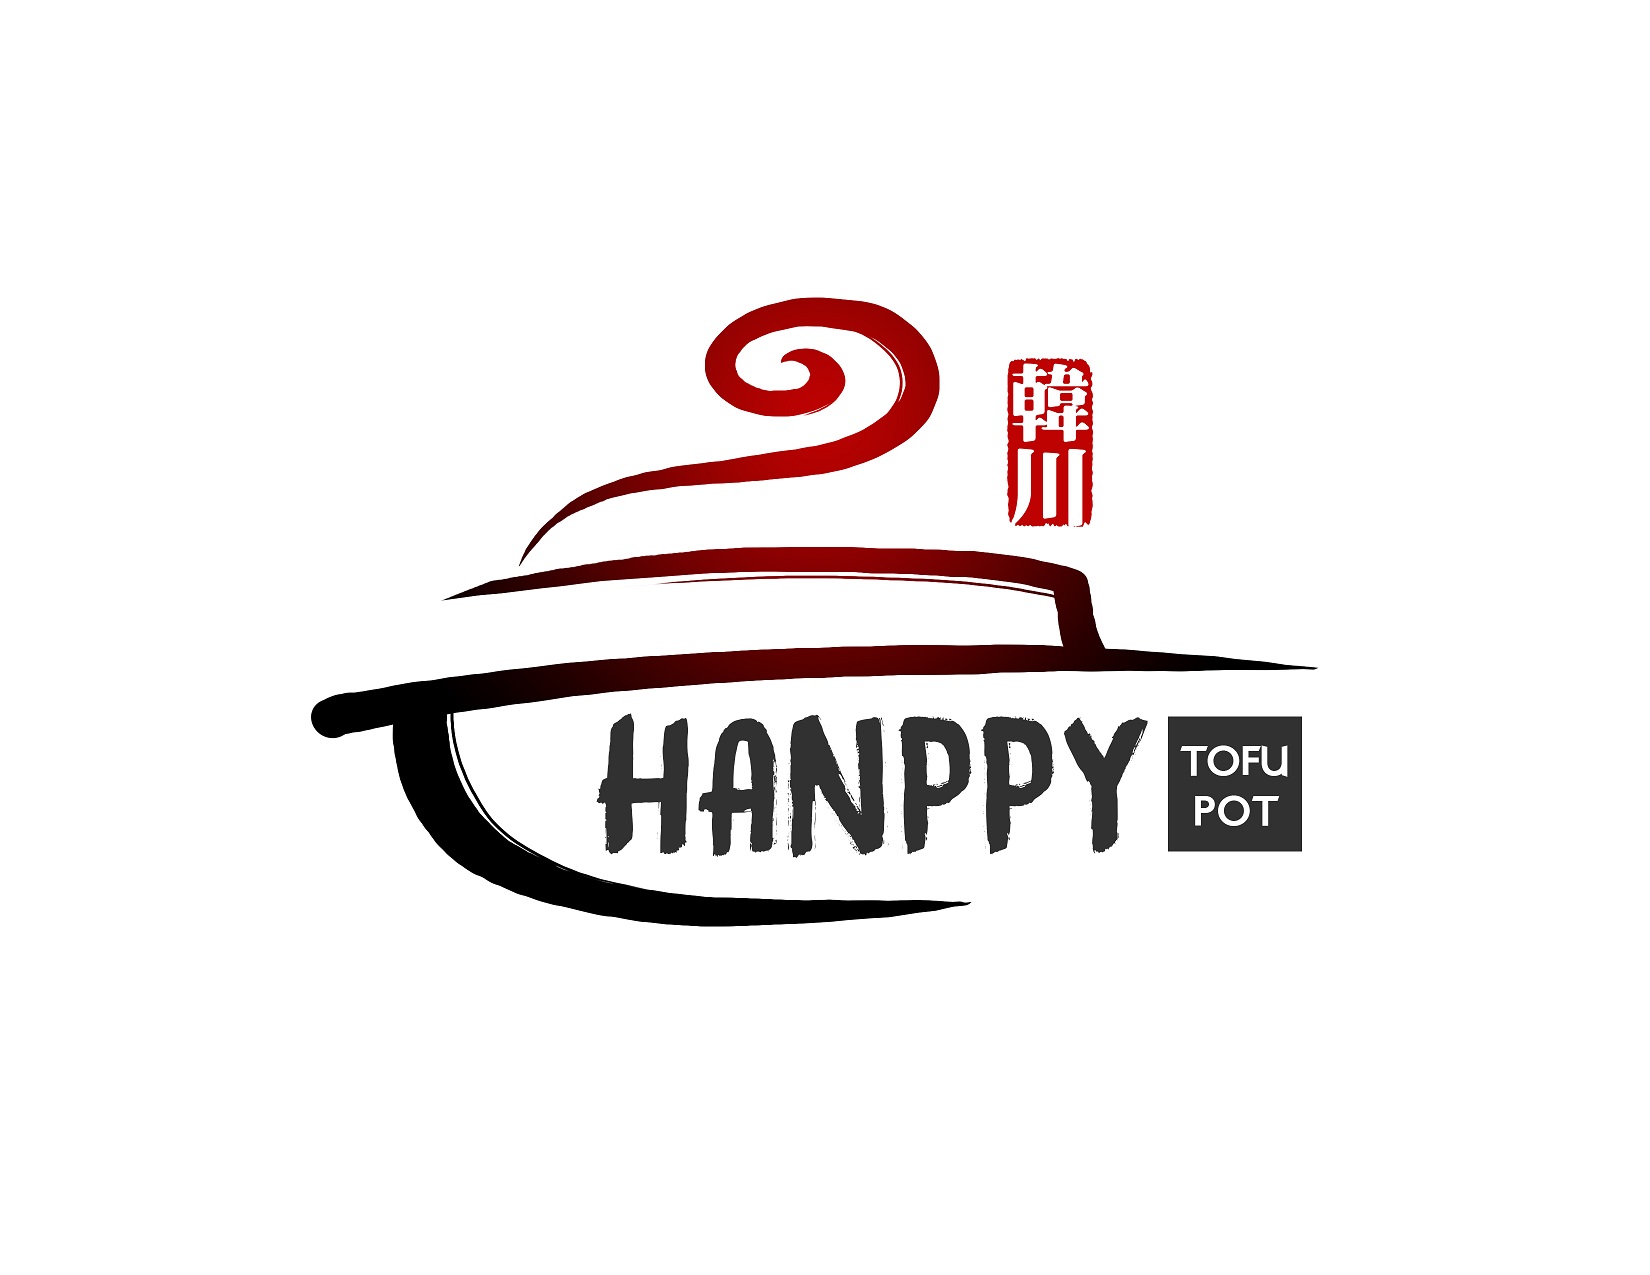 Hanppy Tofu Pot House